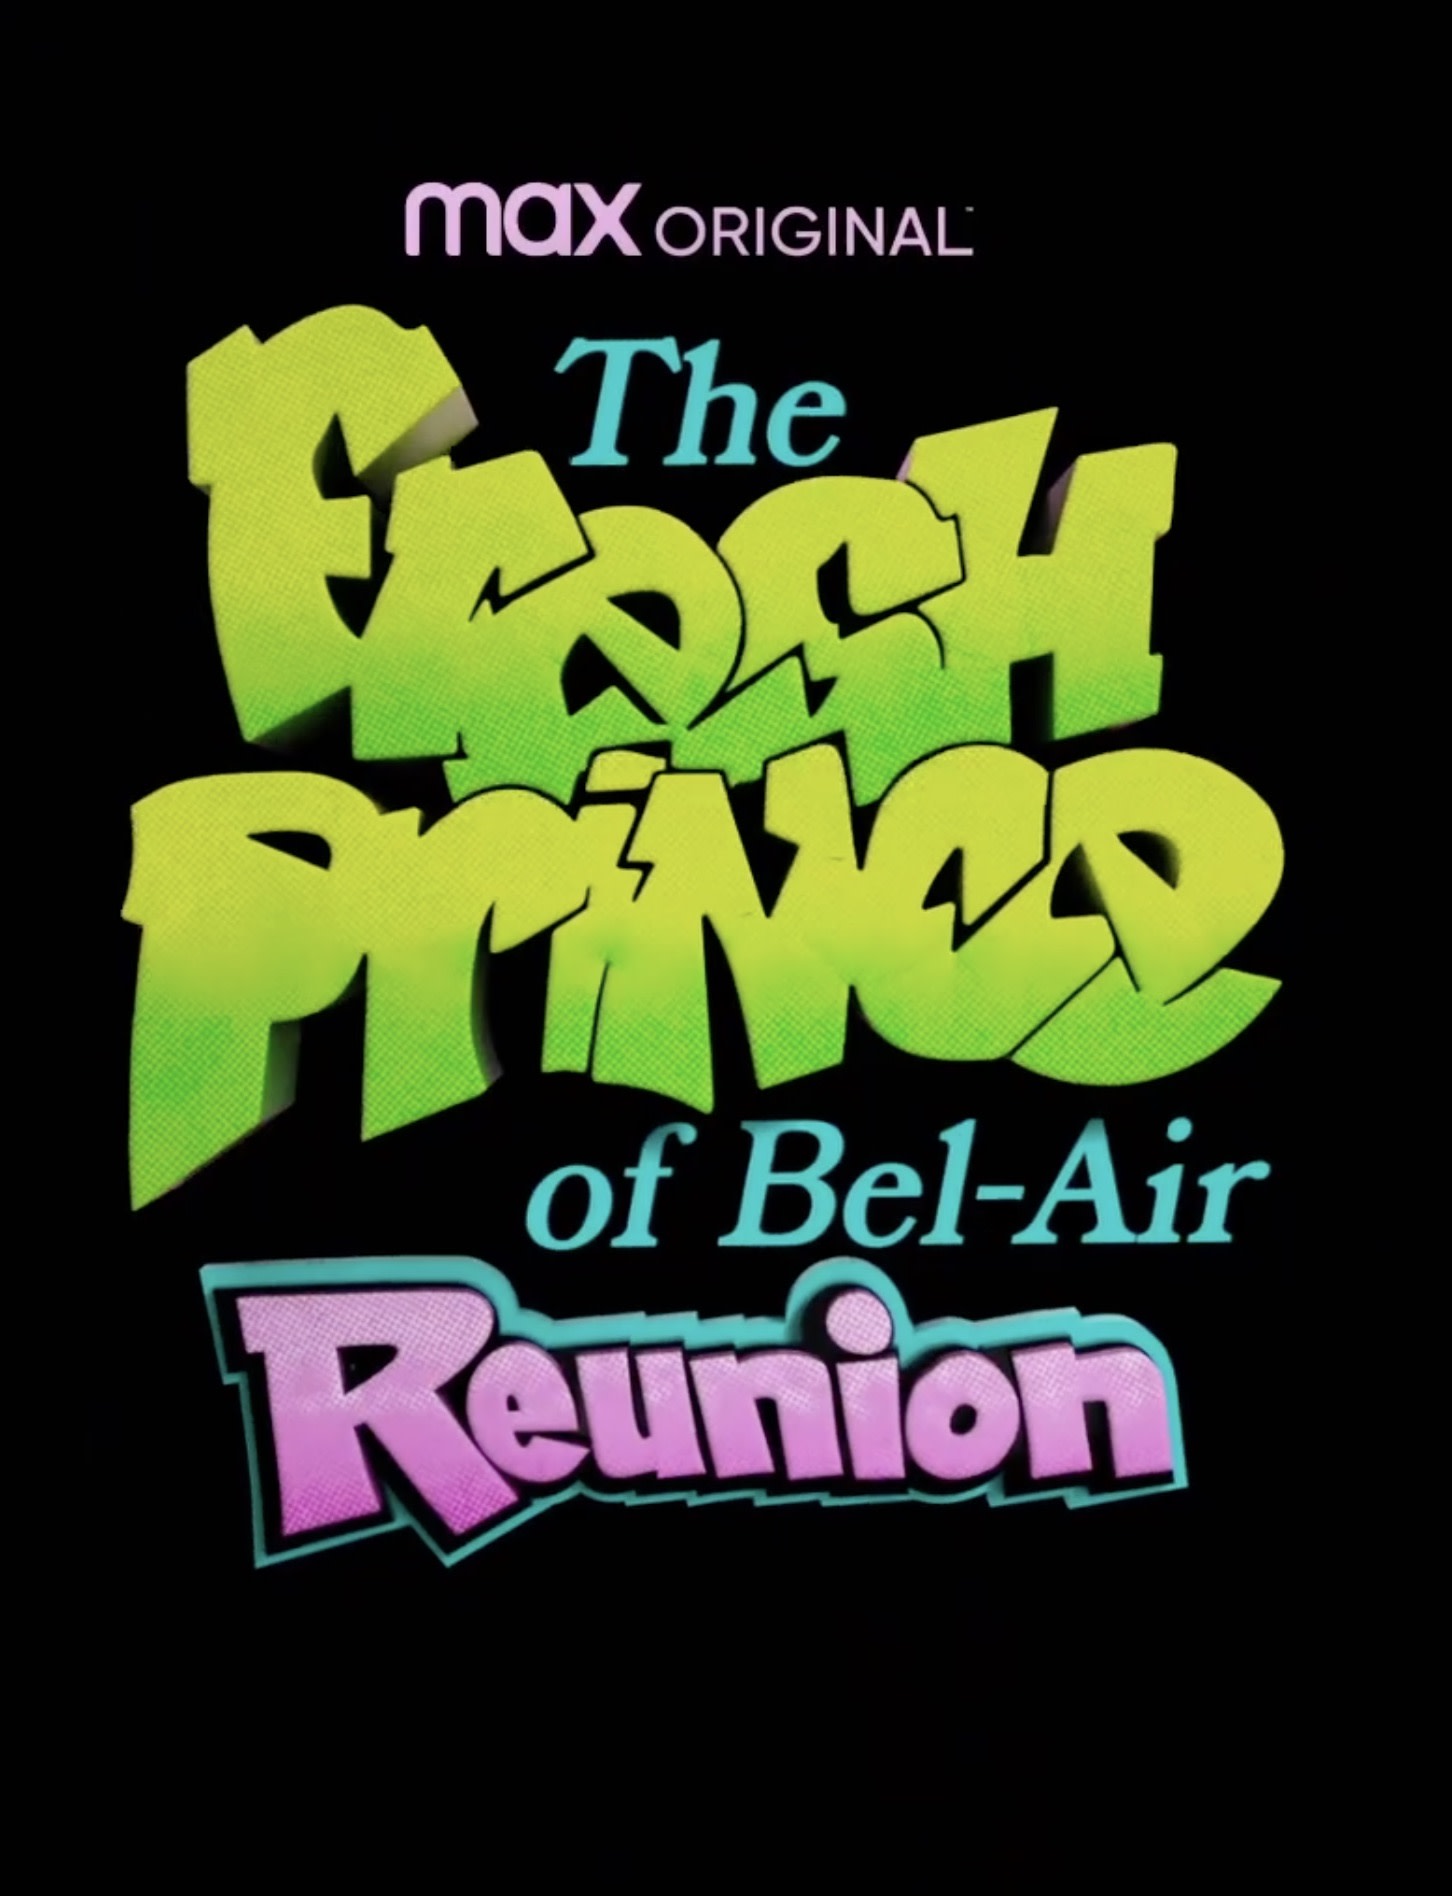 fresh prince of bel air reunion on demand